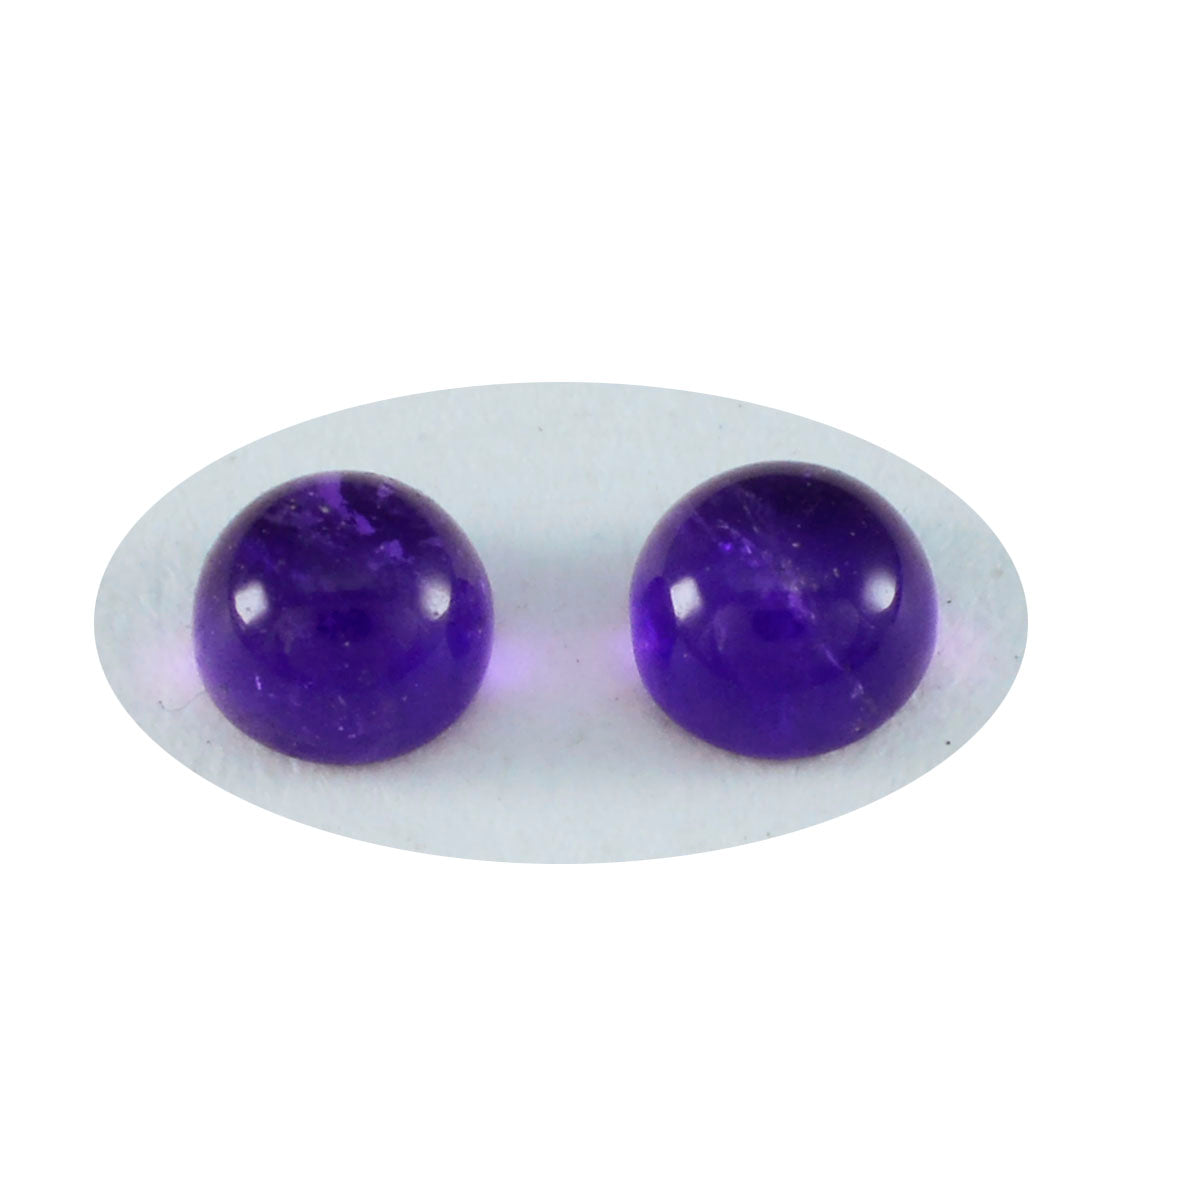 Riyogems 1PC Purple Amethyst Cabochon 5x5 mm Round Shape awesome Quality Loose Gems